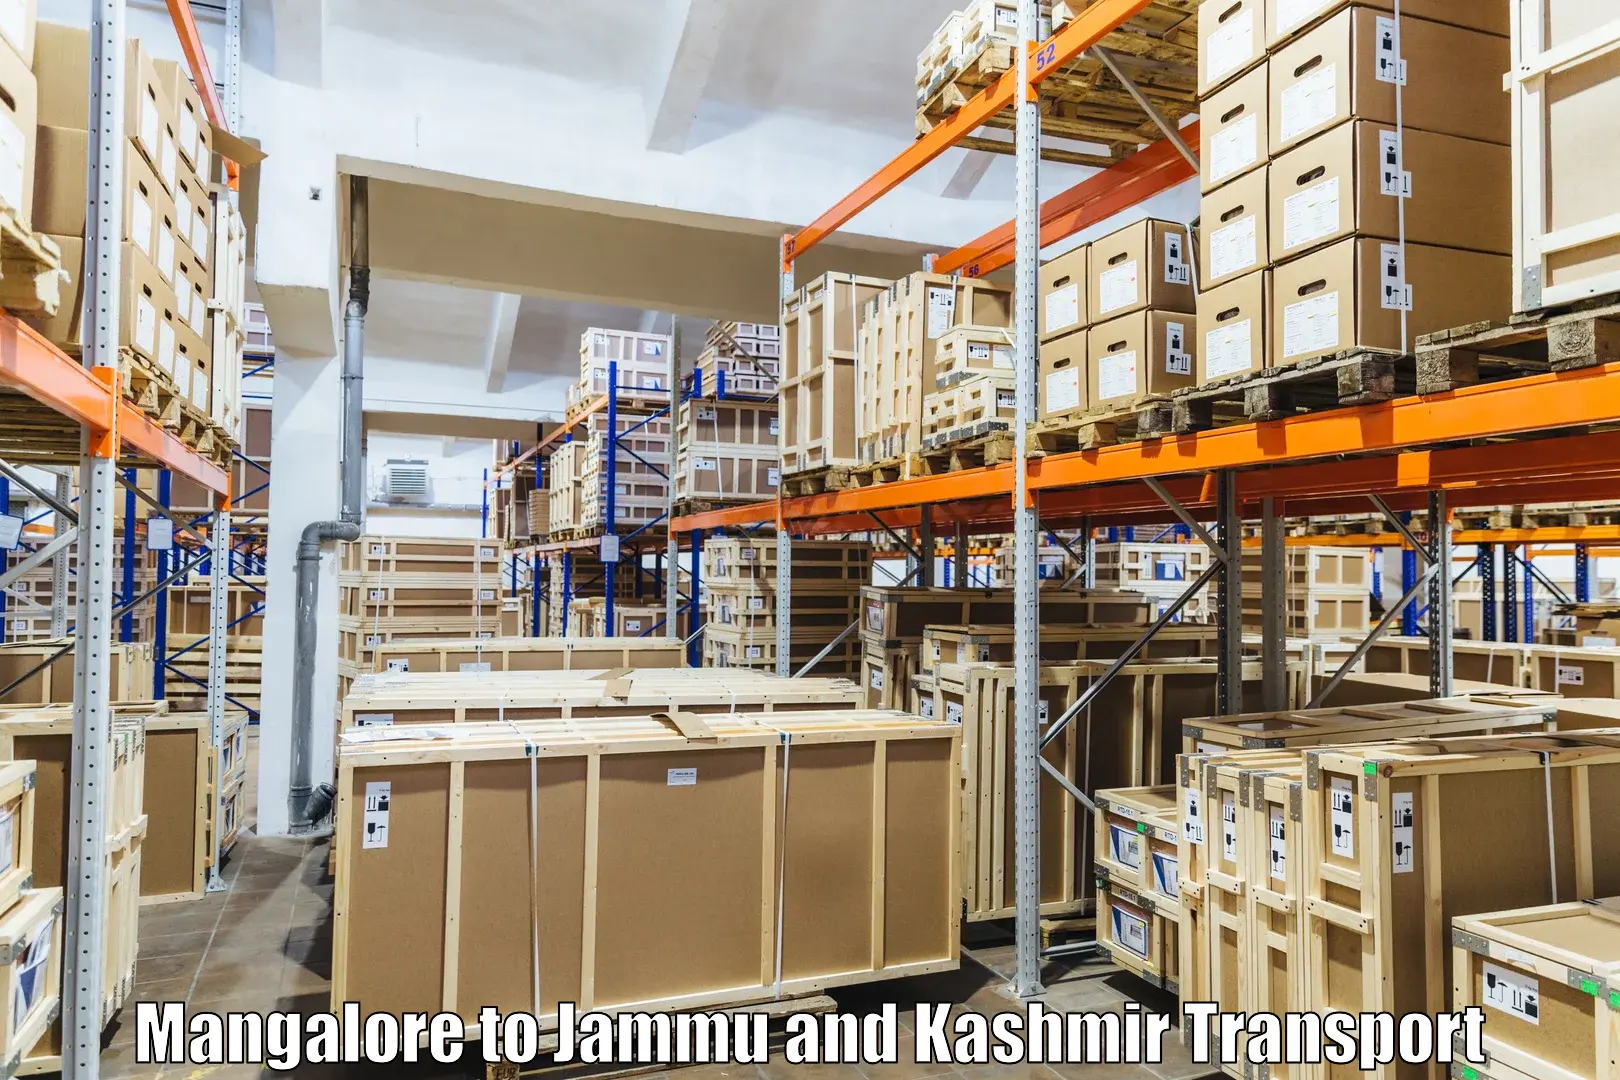 Truck transport companies in India Mangalore to Srinagar Kashmir